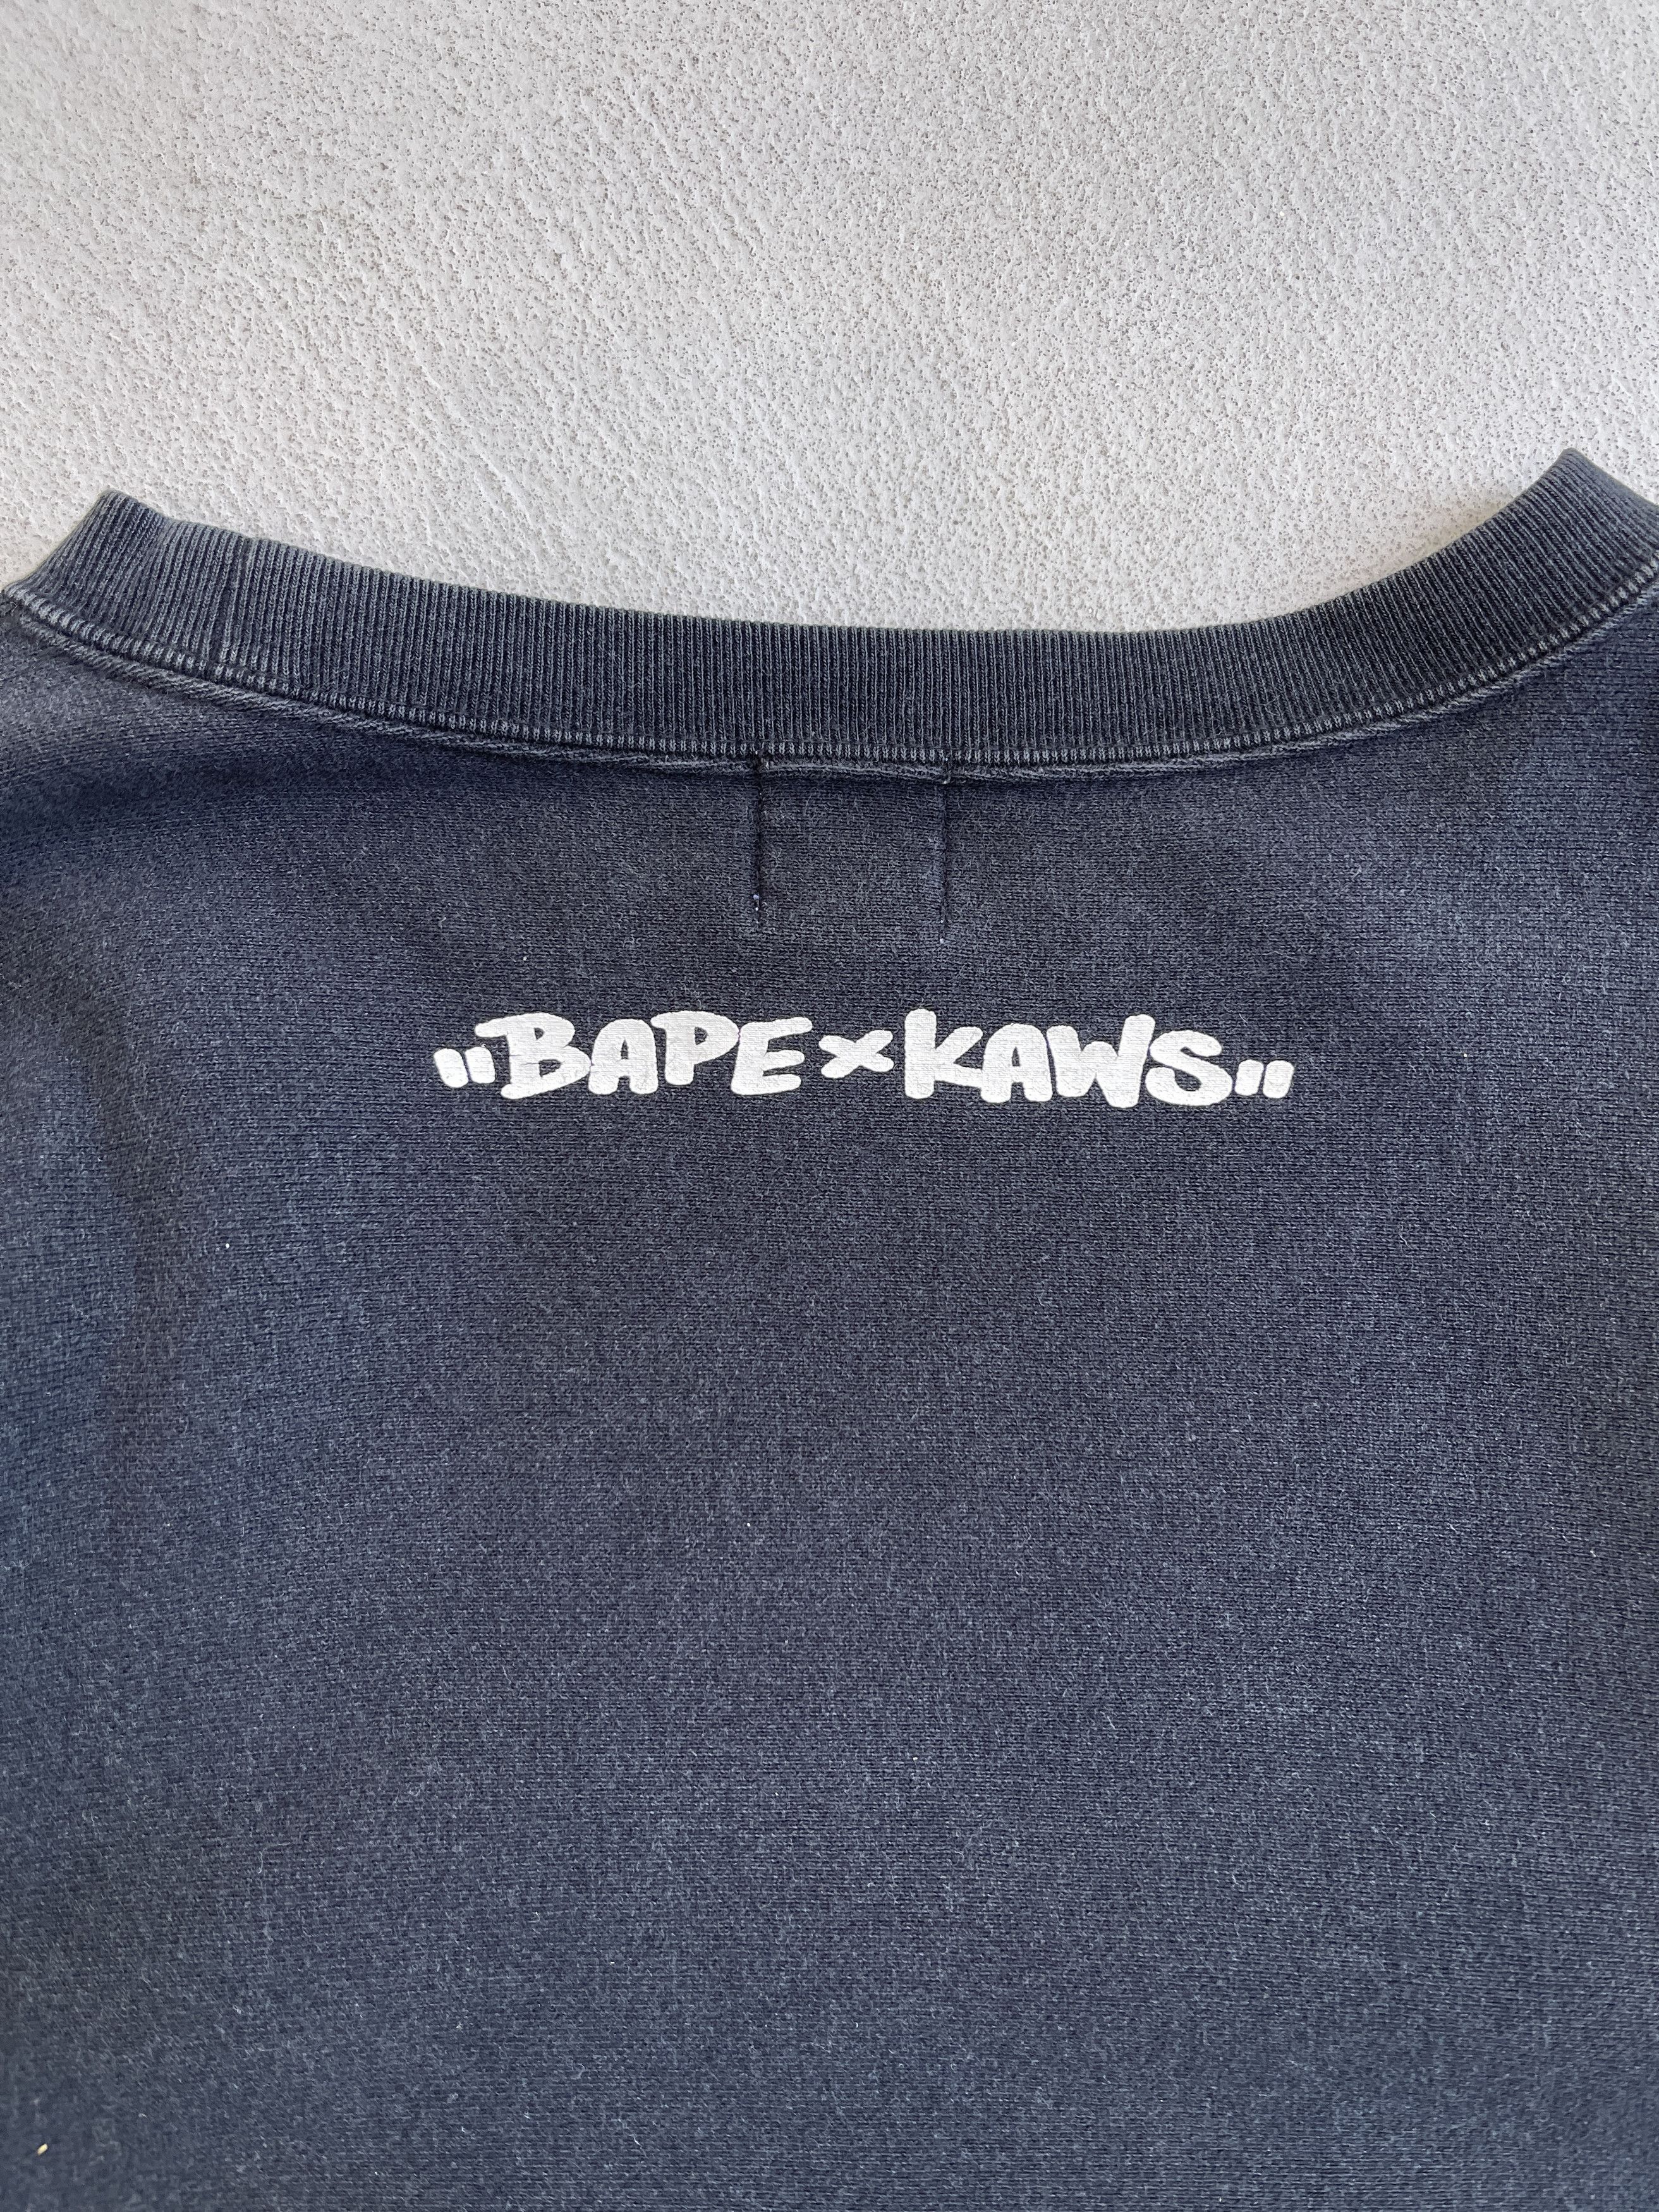 2005 Bape x Kaws OG Bapesta Sweatshirt - 6